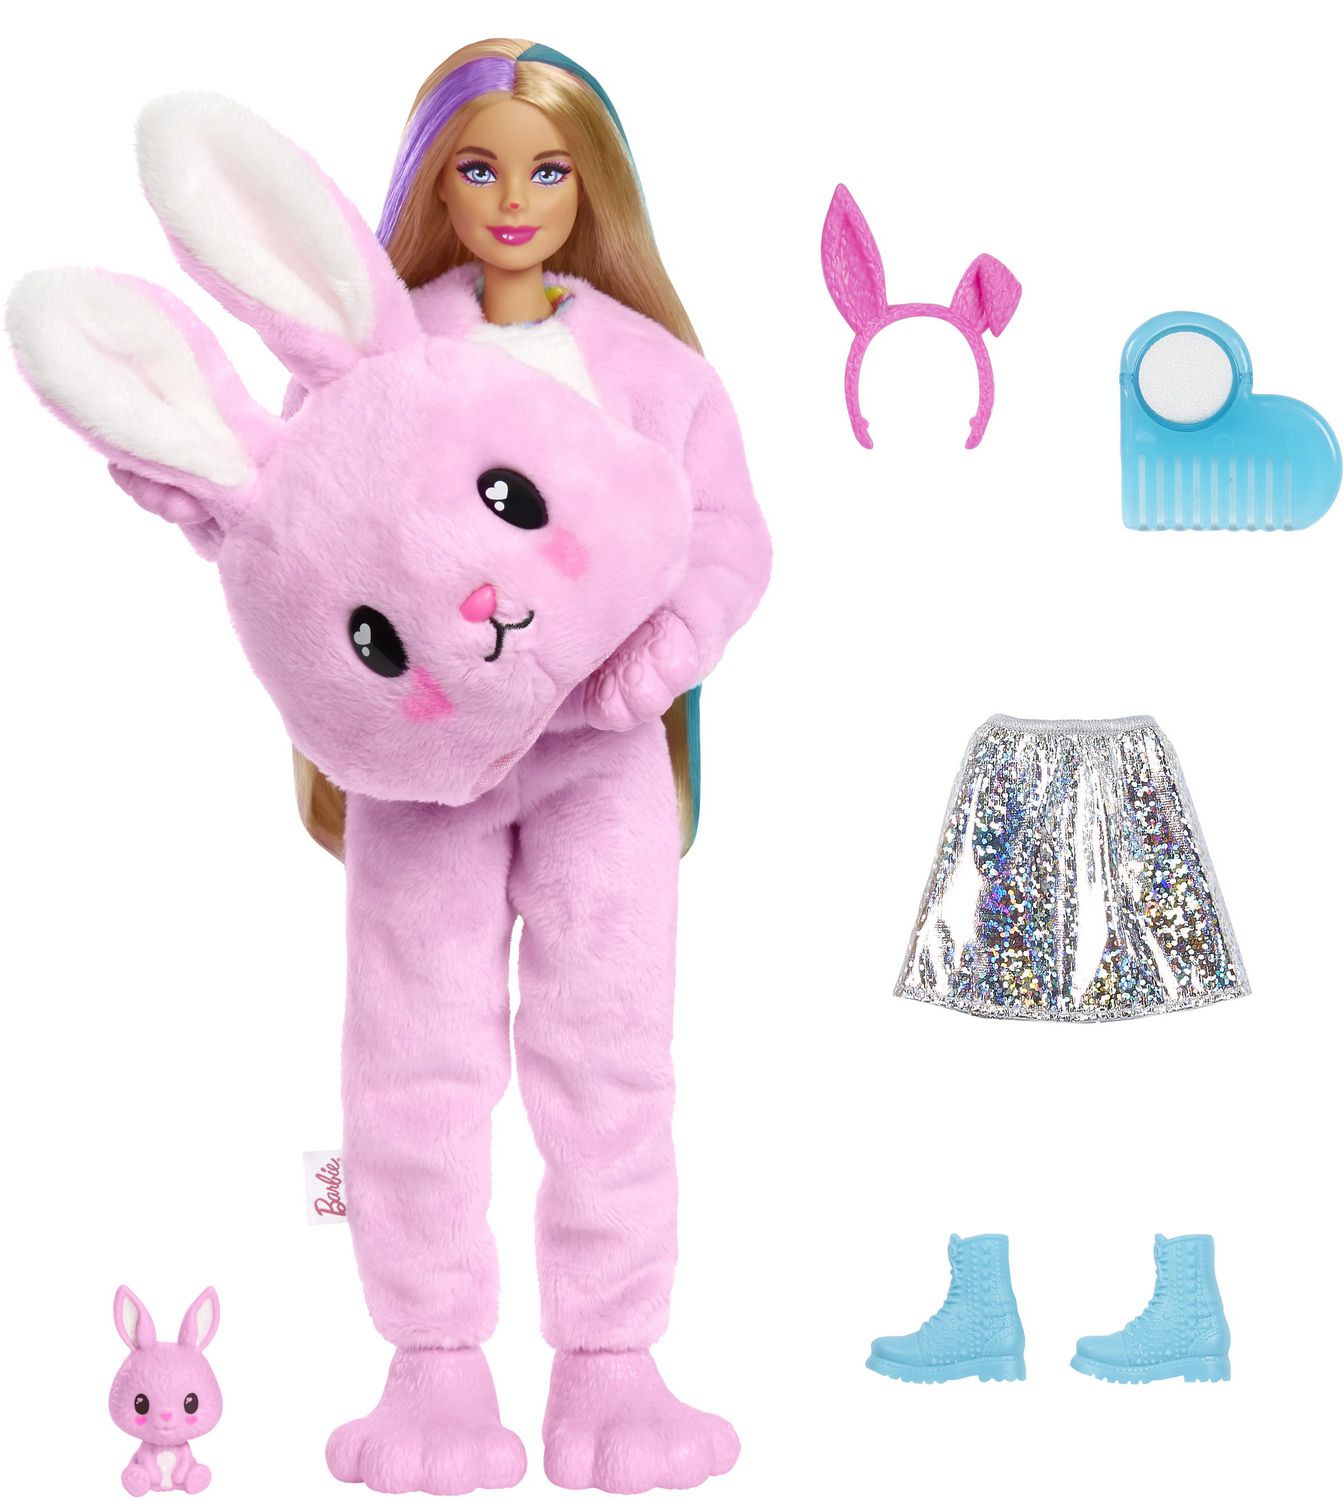 Barbie Cutie Reveal Doll with Bunny Plush Costume & 10 Surprises